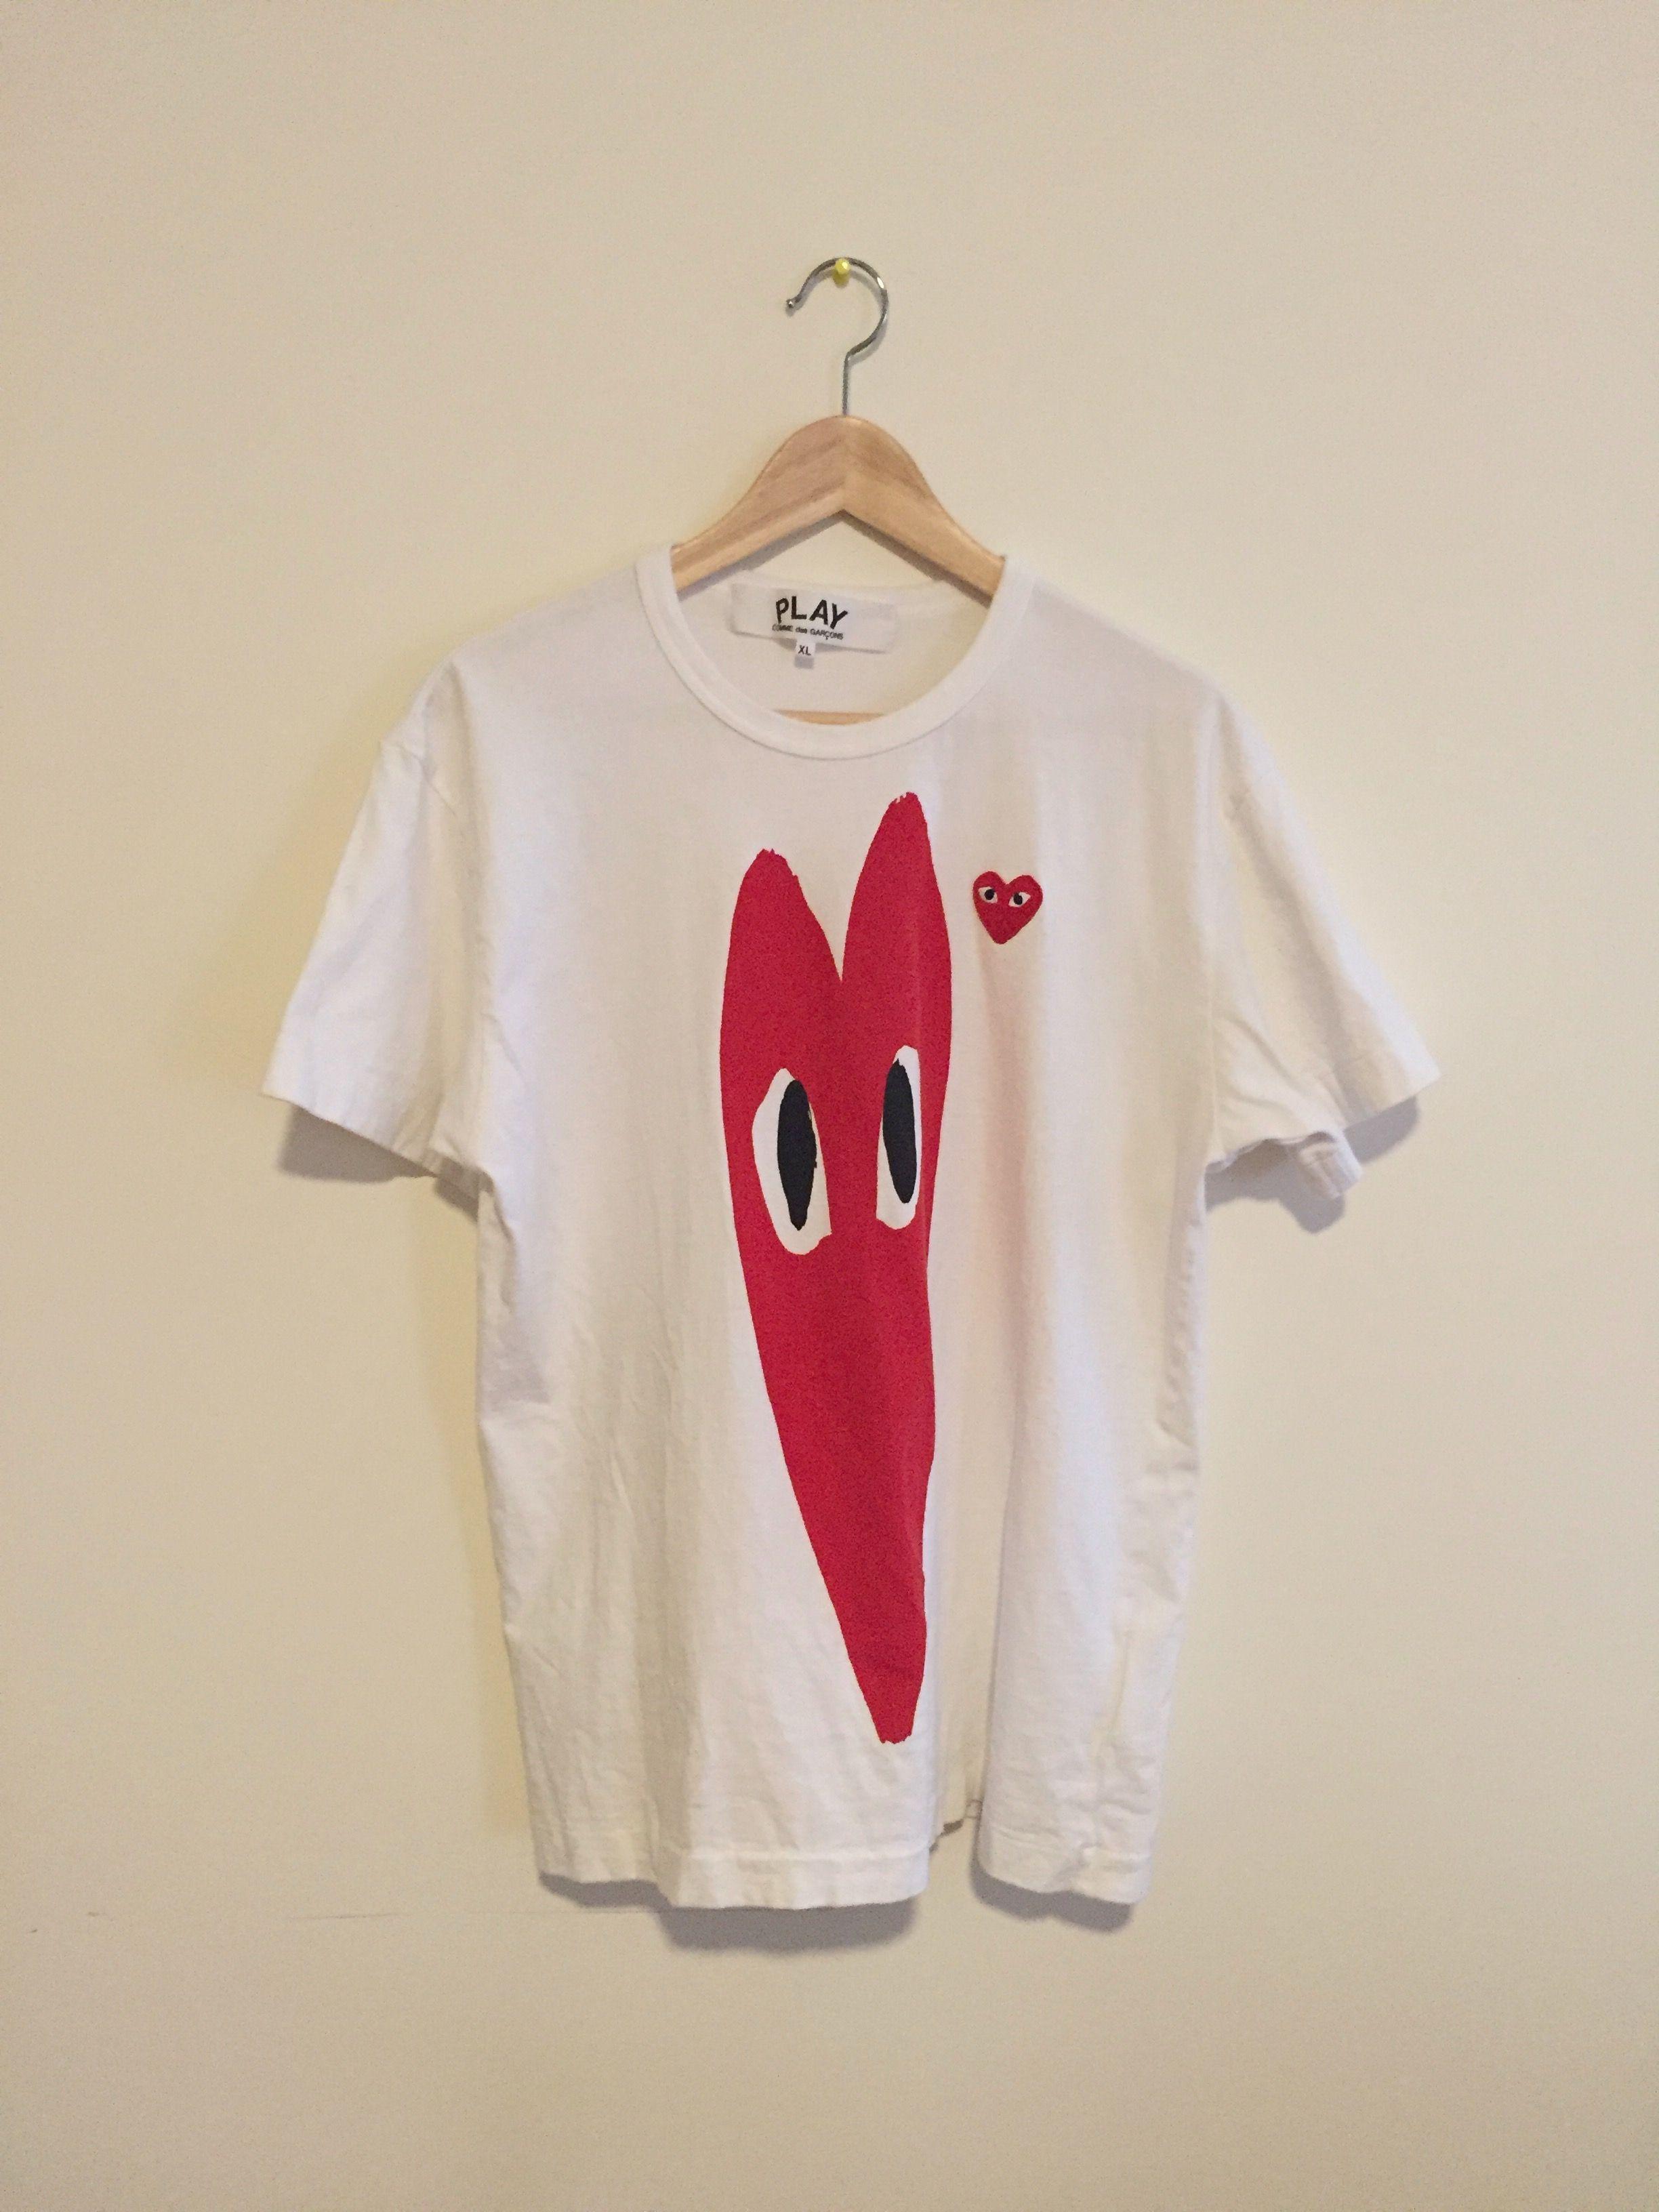 CDG Heart Logo - Comme des Garcons CDG Heart Logo T-Shirt Size xl - Short Sleeve T ...